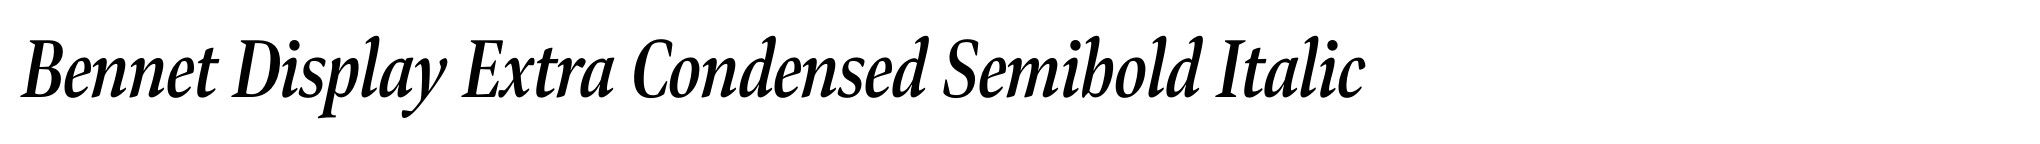 Bennet Display Extra Condensed Semibold Italic image